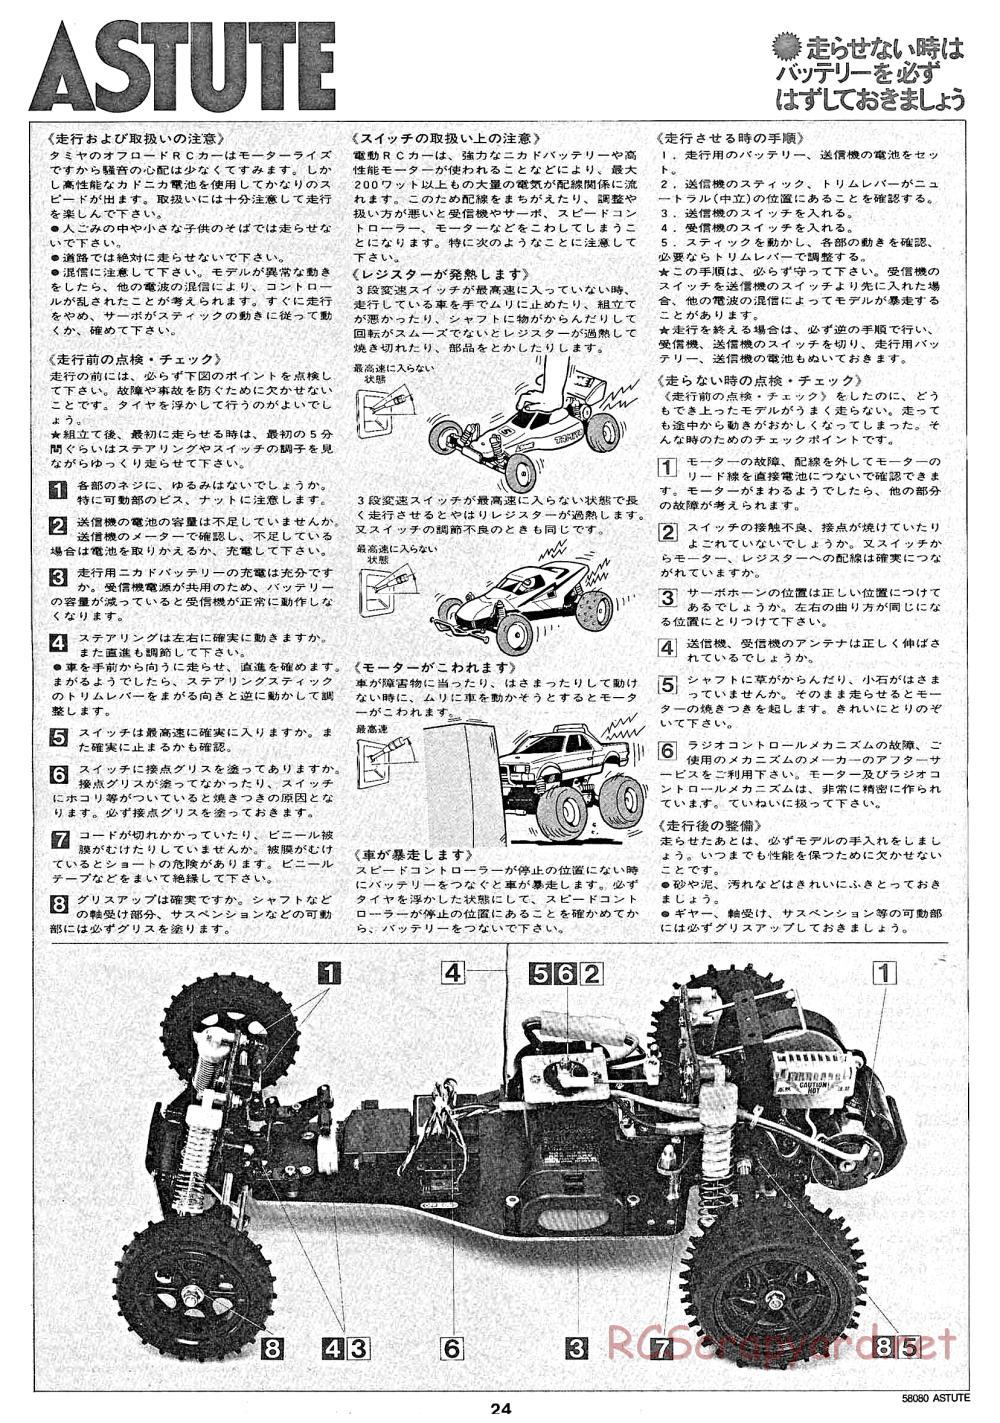 Tamiya - Astute - 58080 - Manual - Page 24